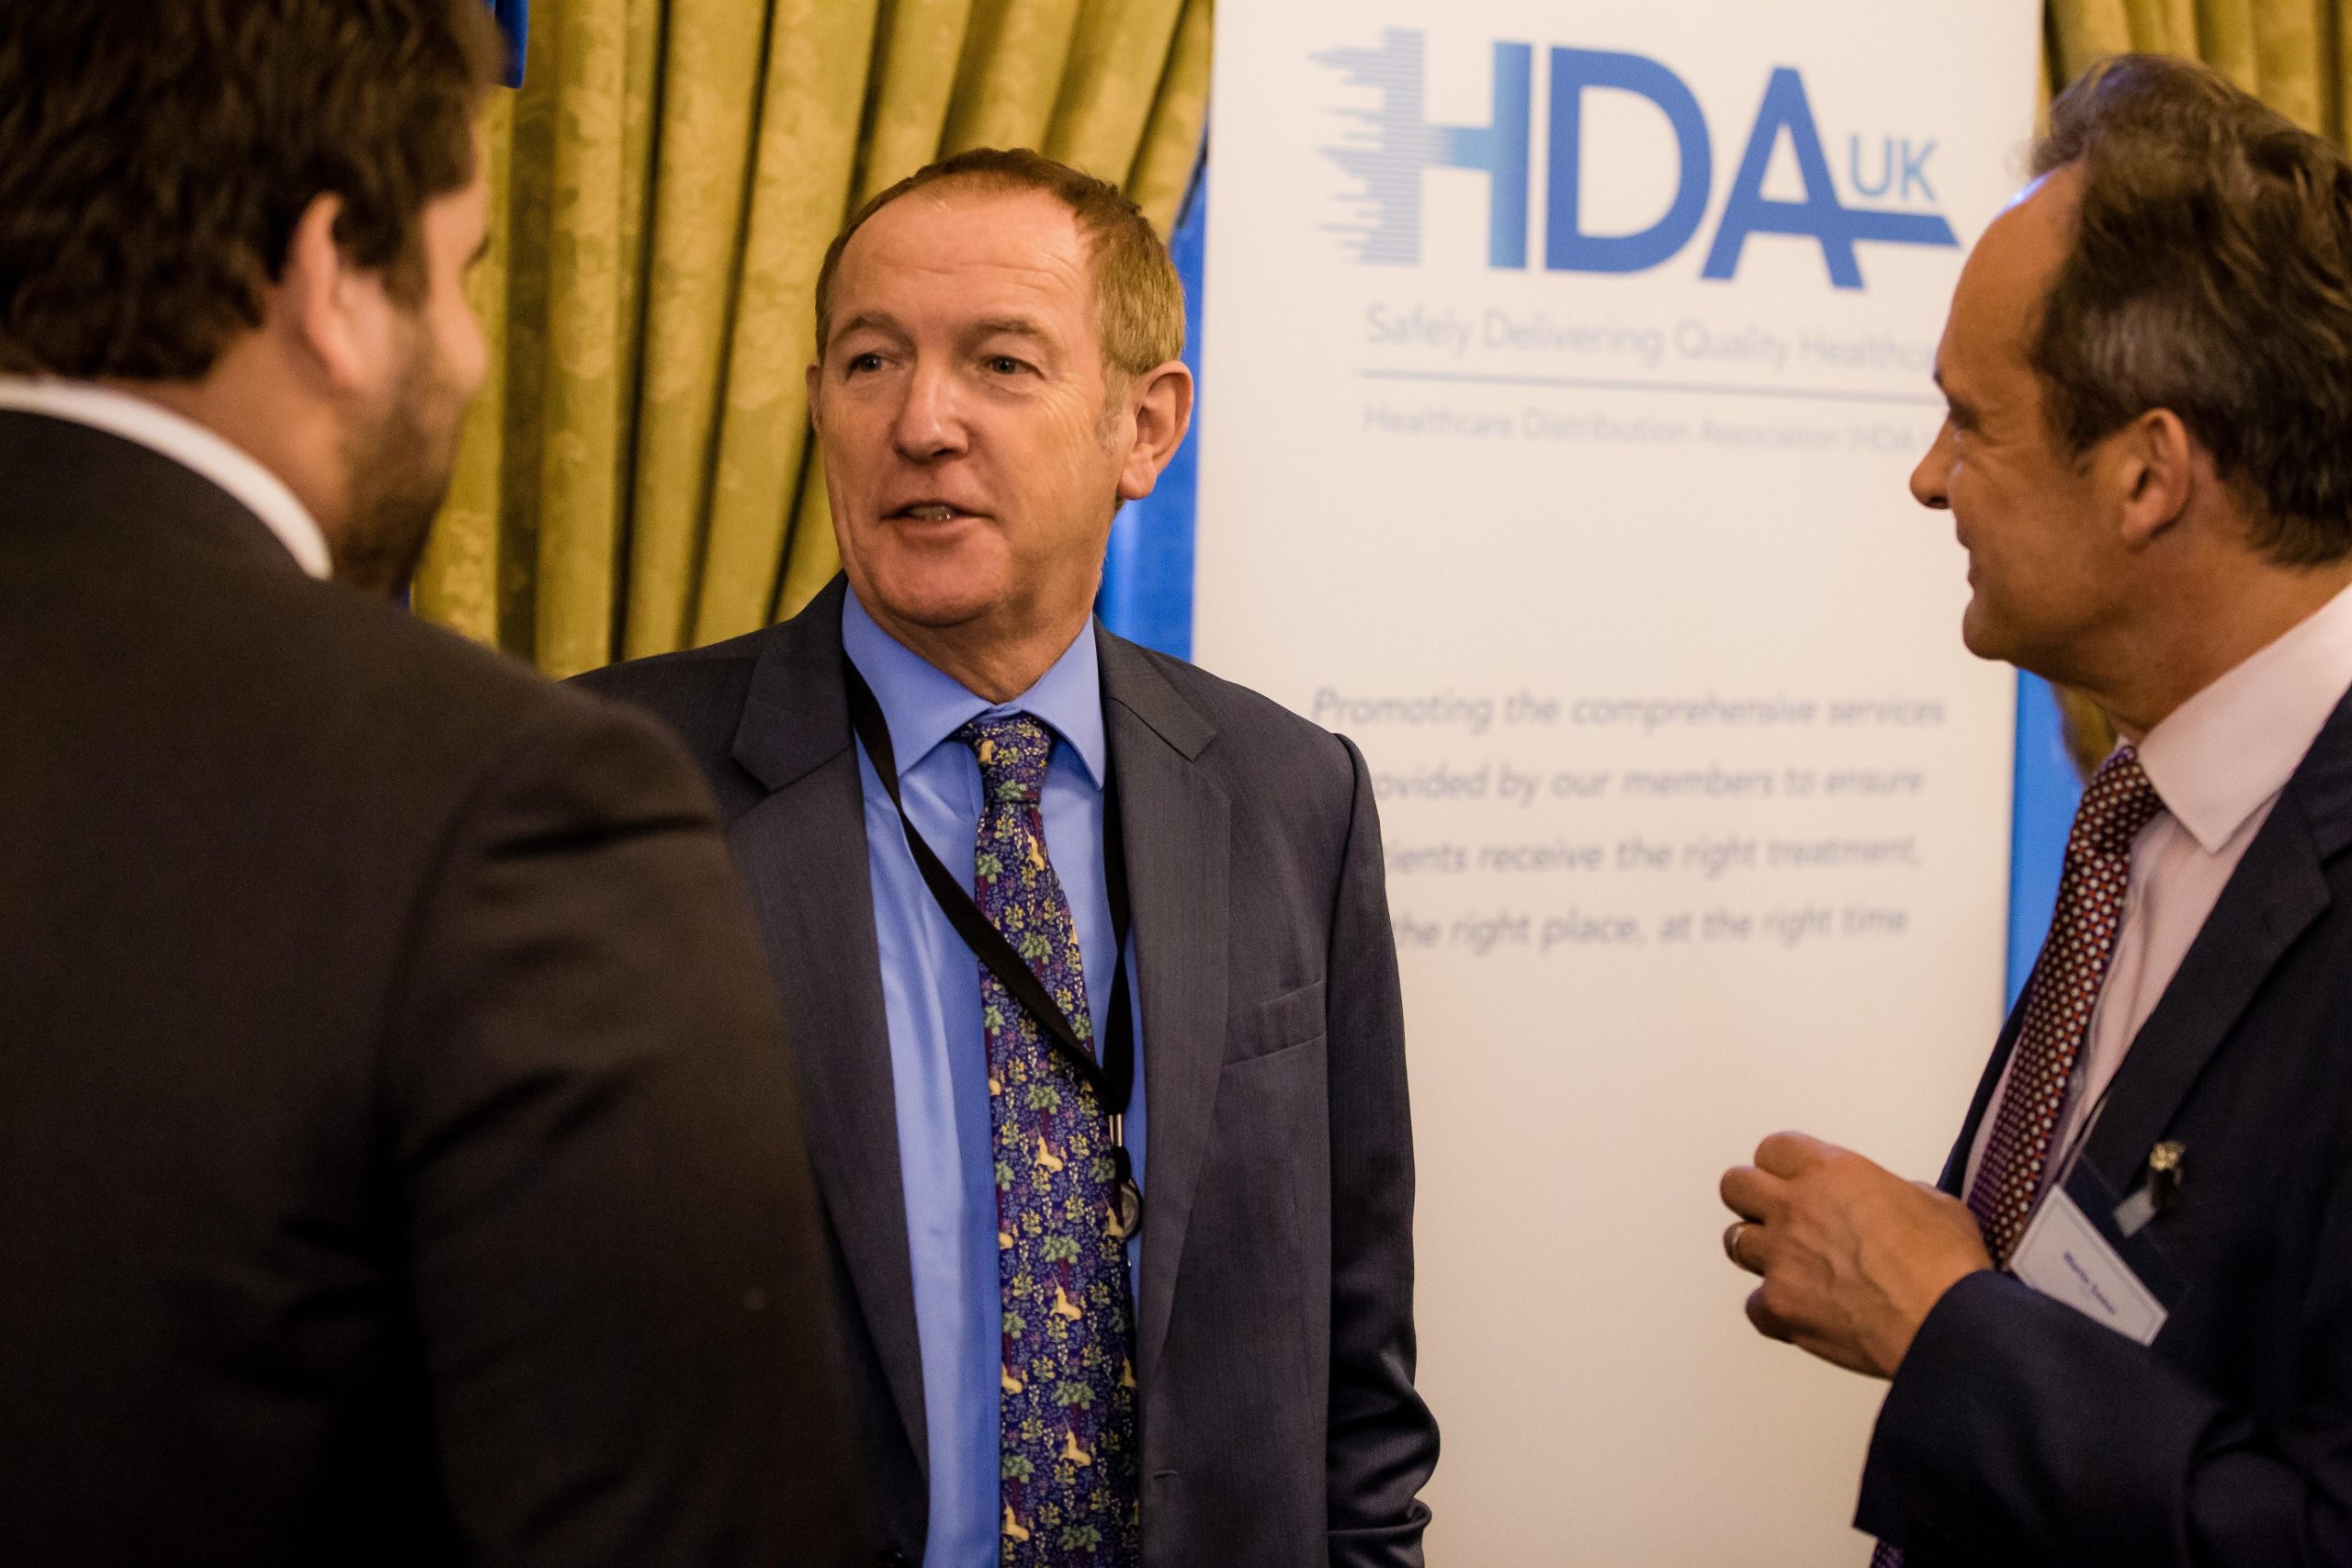 HDA UK Raises Fundamental Concerns On Government Hub And Spoke Proposals